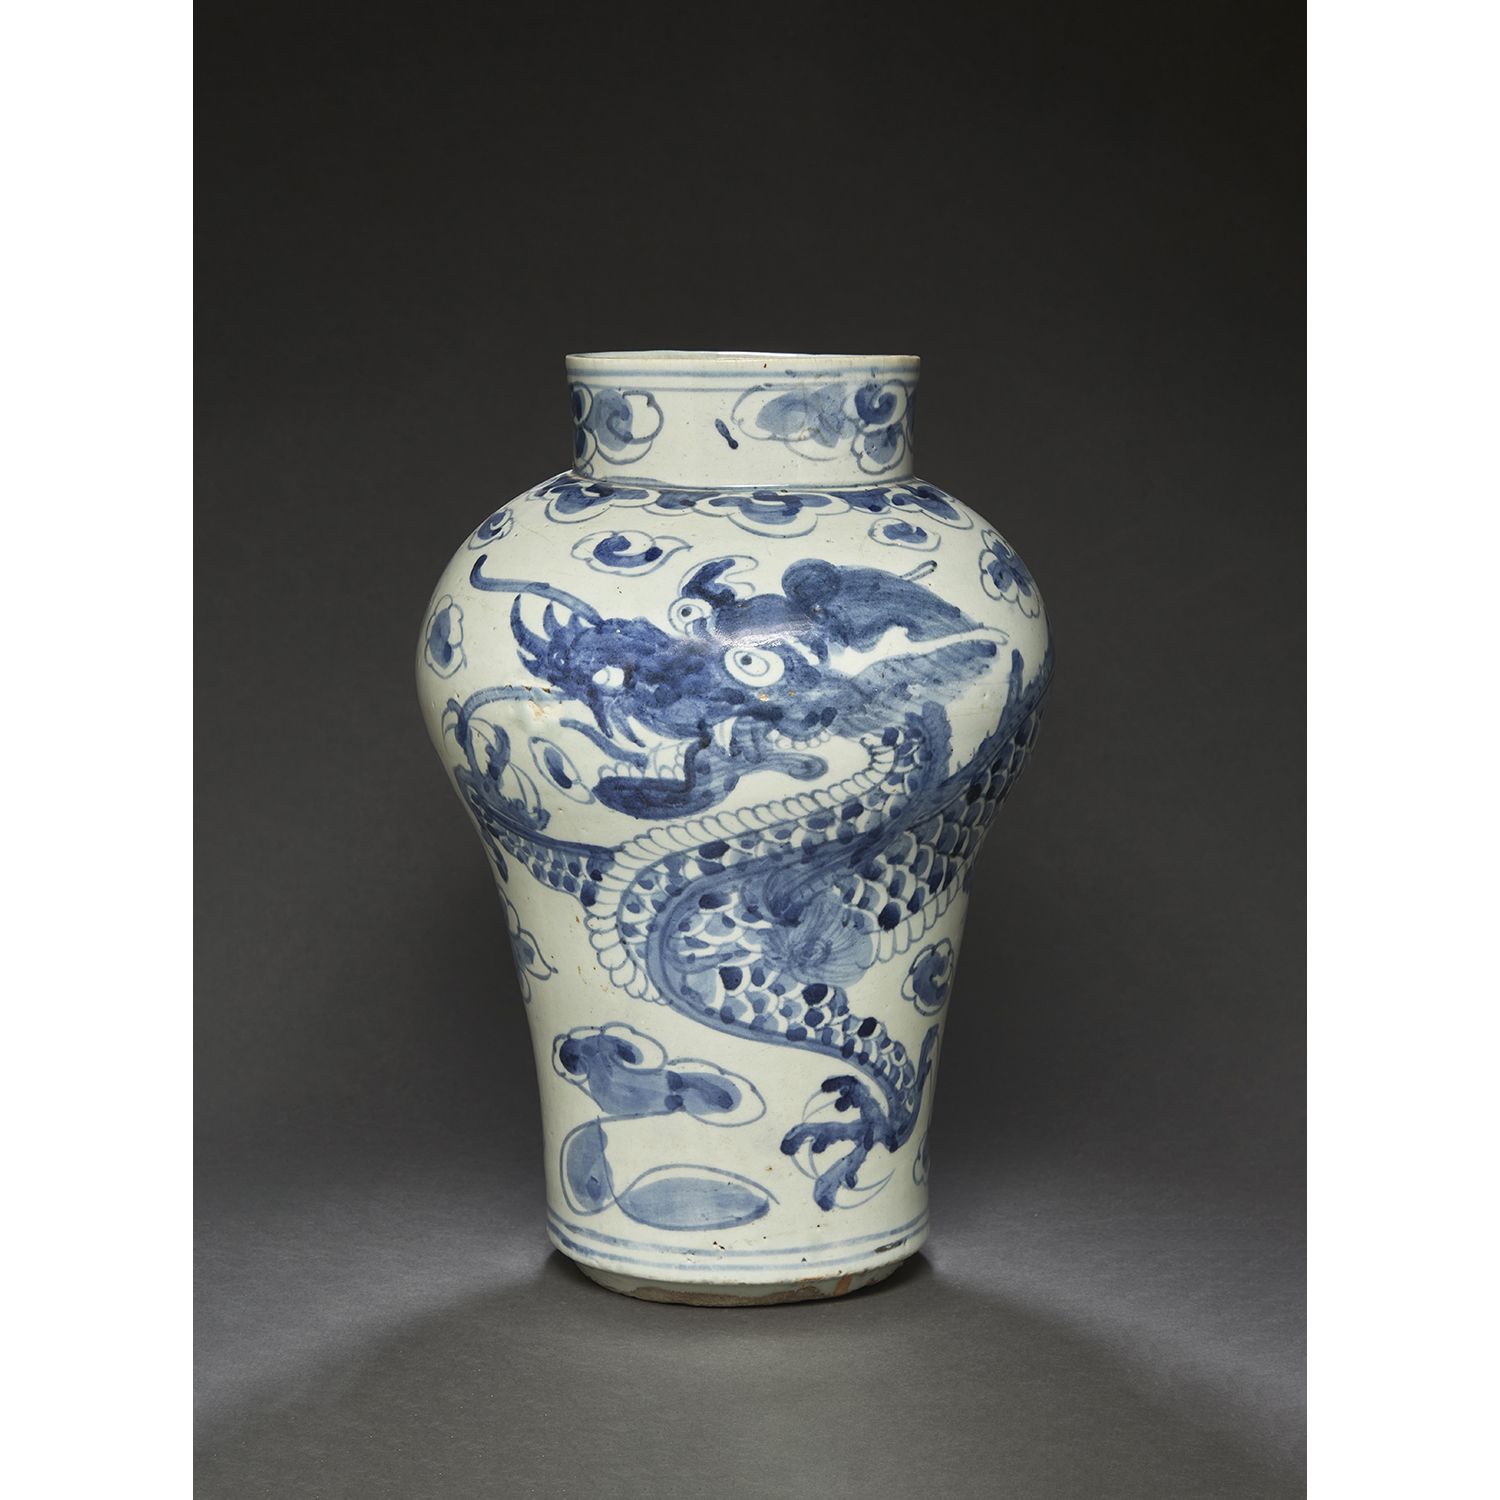 Null 一个大的
瓷器和蓝白珐琅罐，有一个圆柱形的颈部和脚跟，罐身装饰有一条大龙在风格化的云朵中飞翔。
韩国，朝鲜，18世纪末-19世纪初。
大青花云龙纹储物&hellip;